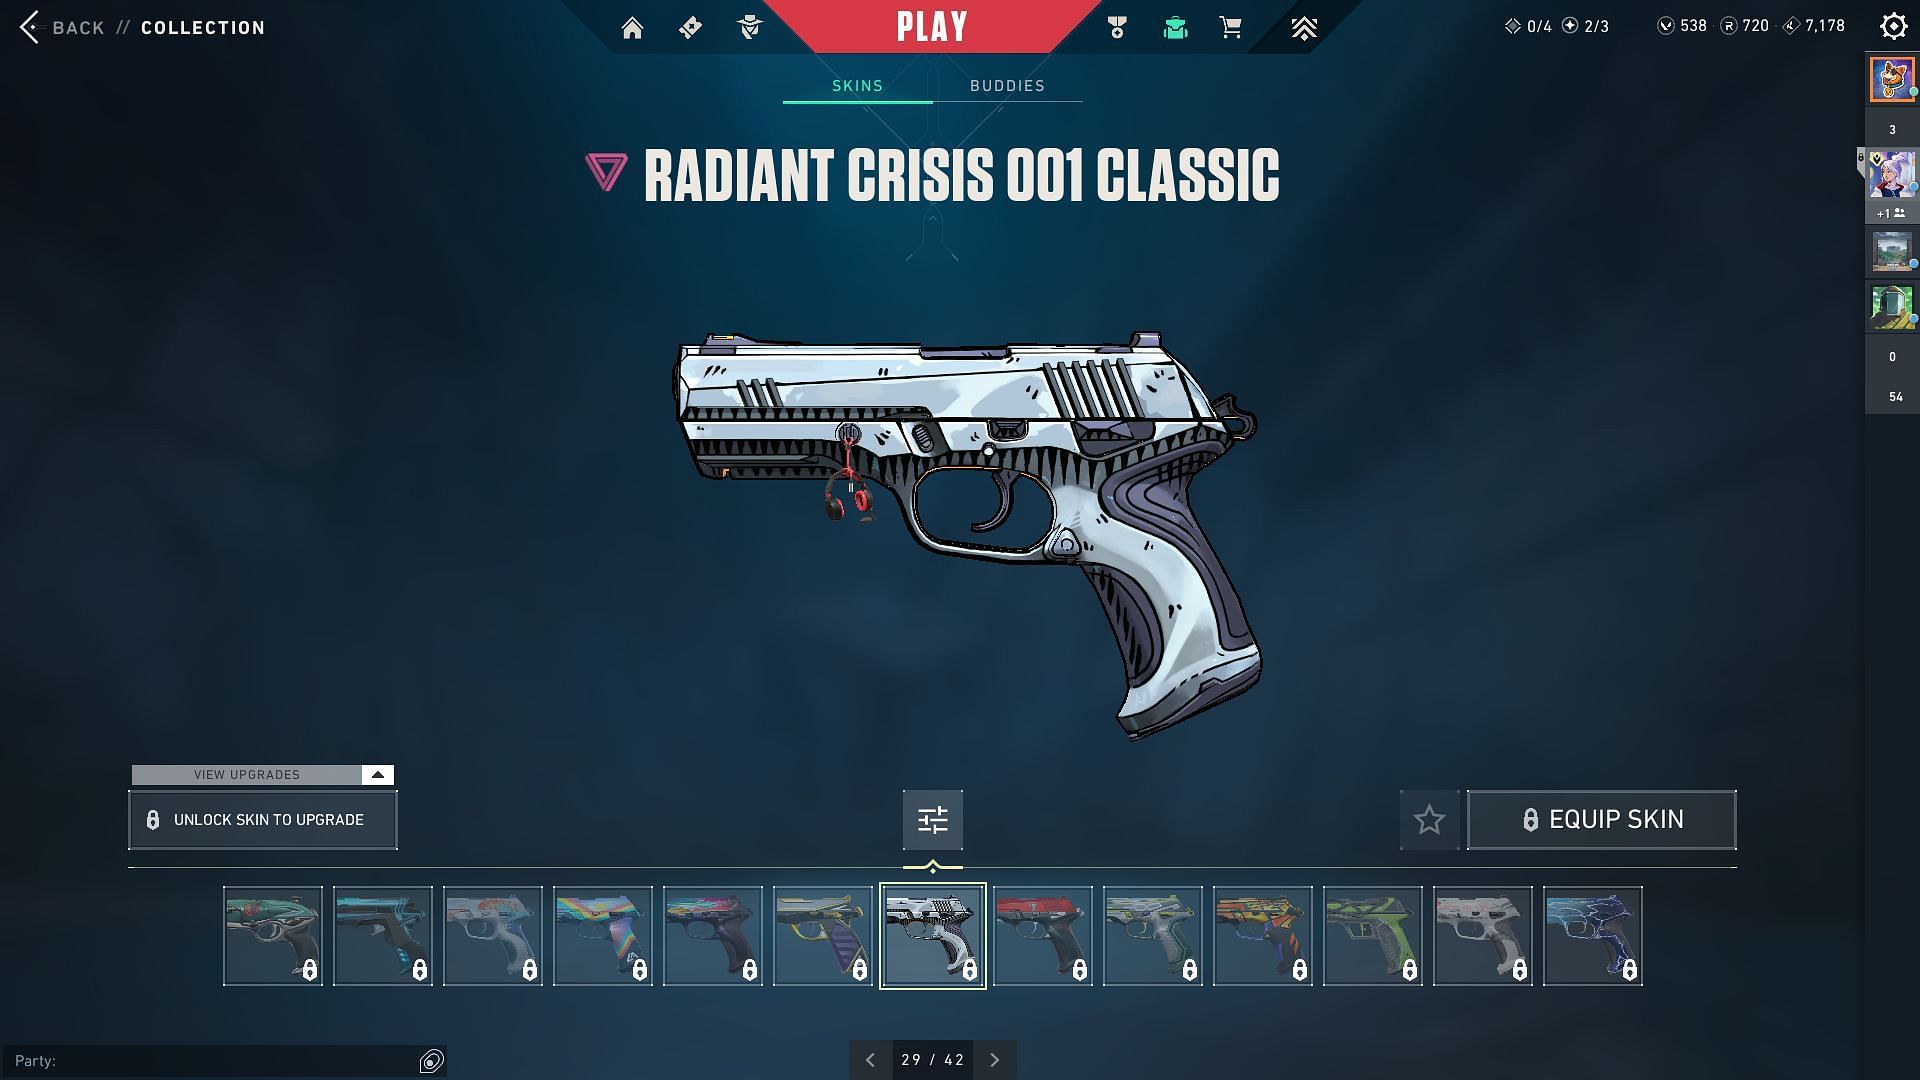 Radiant Crisis 001 Classic (Image via Riot Games)